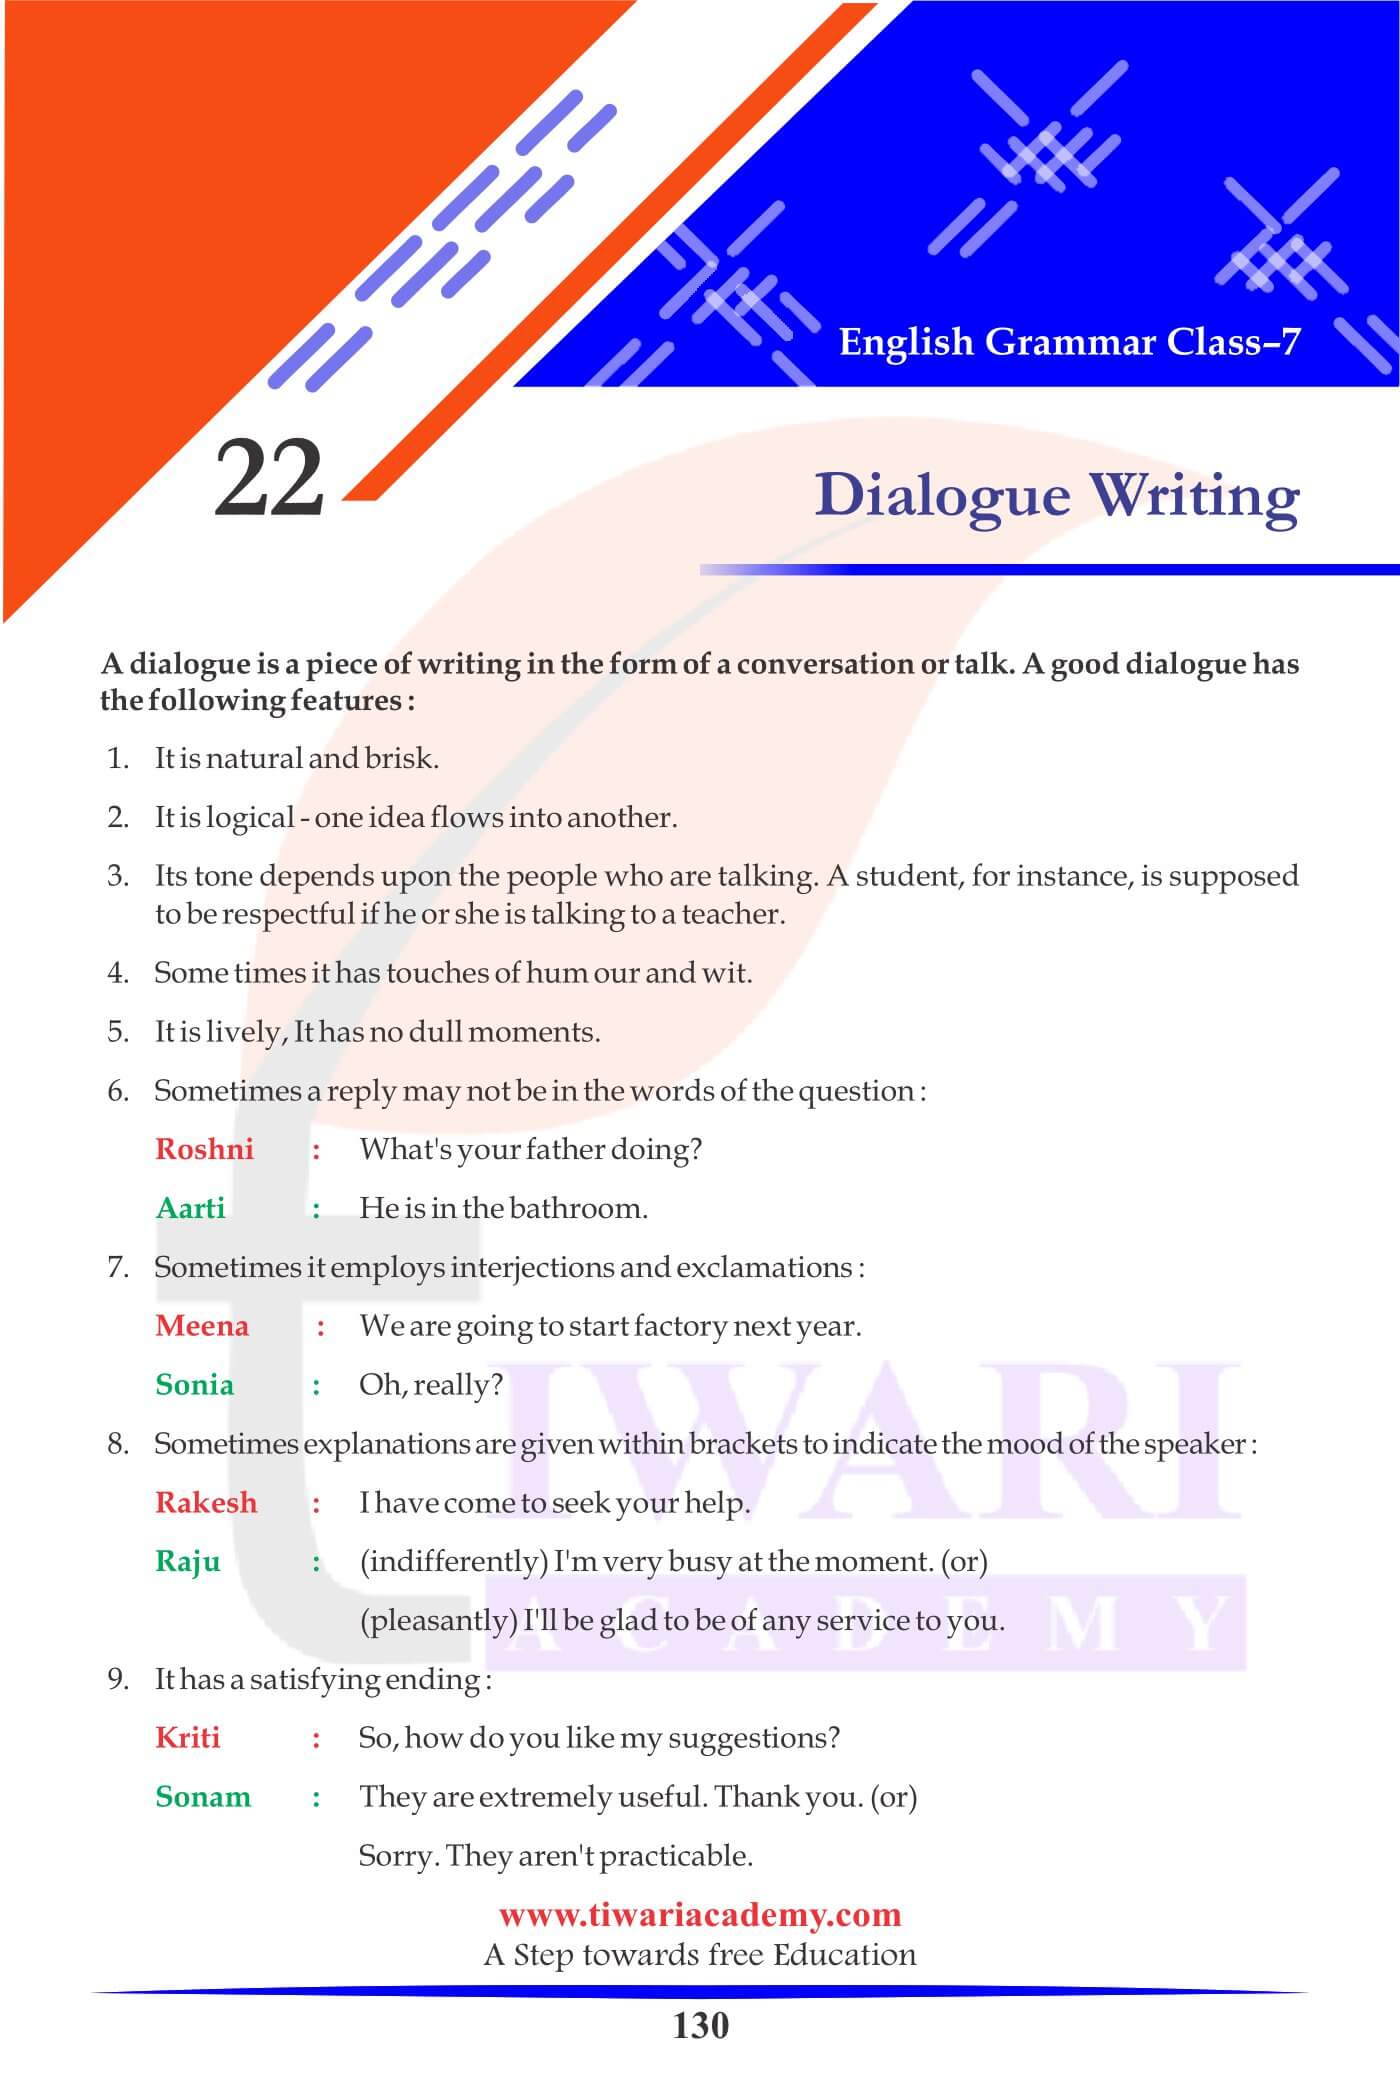 Class 7 English Grammar Dialogue Writing